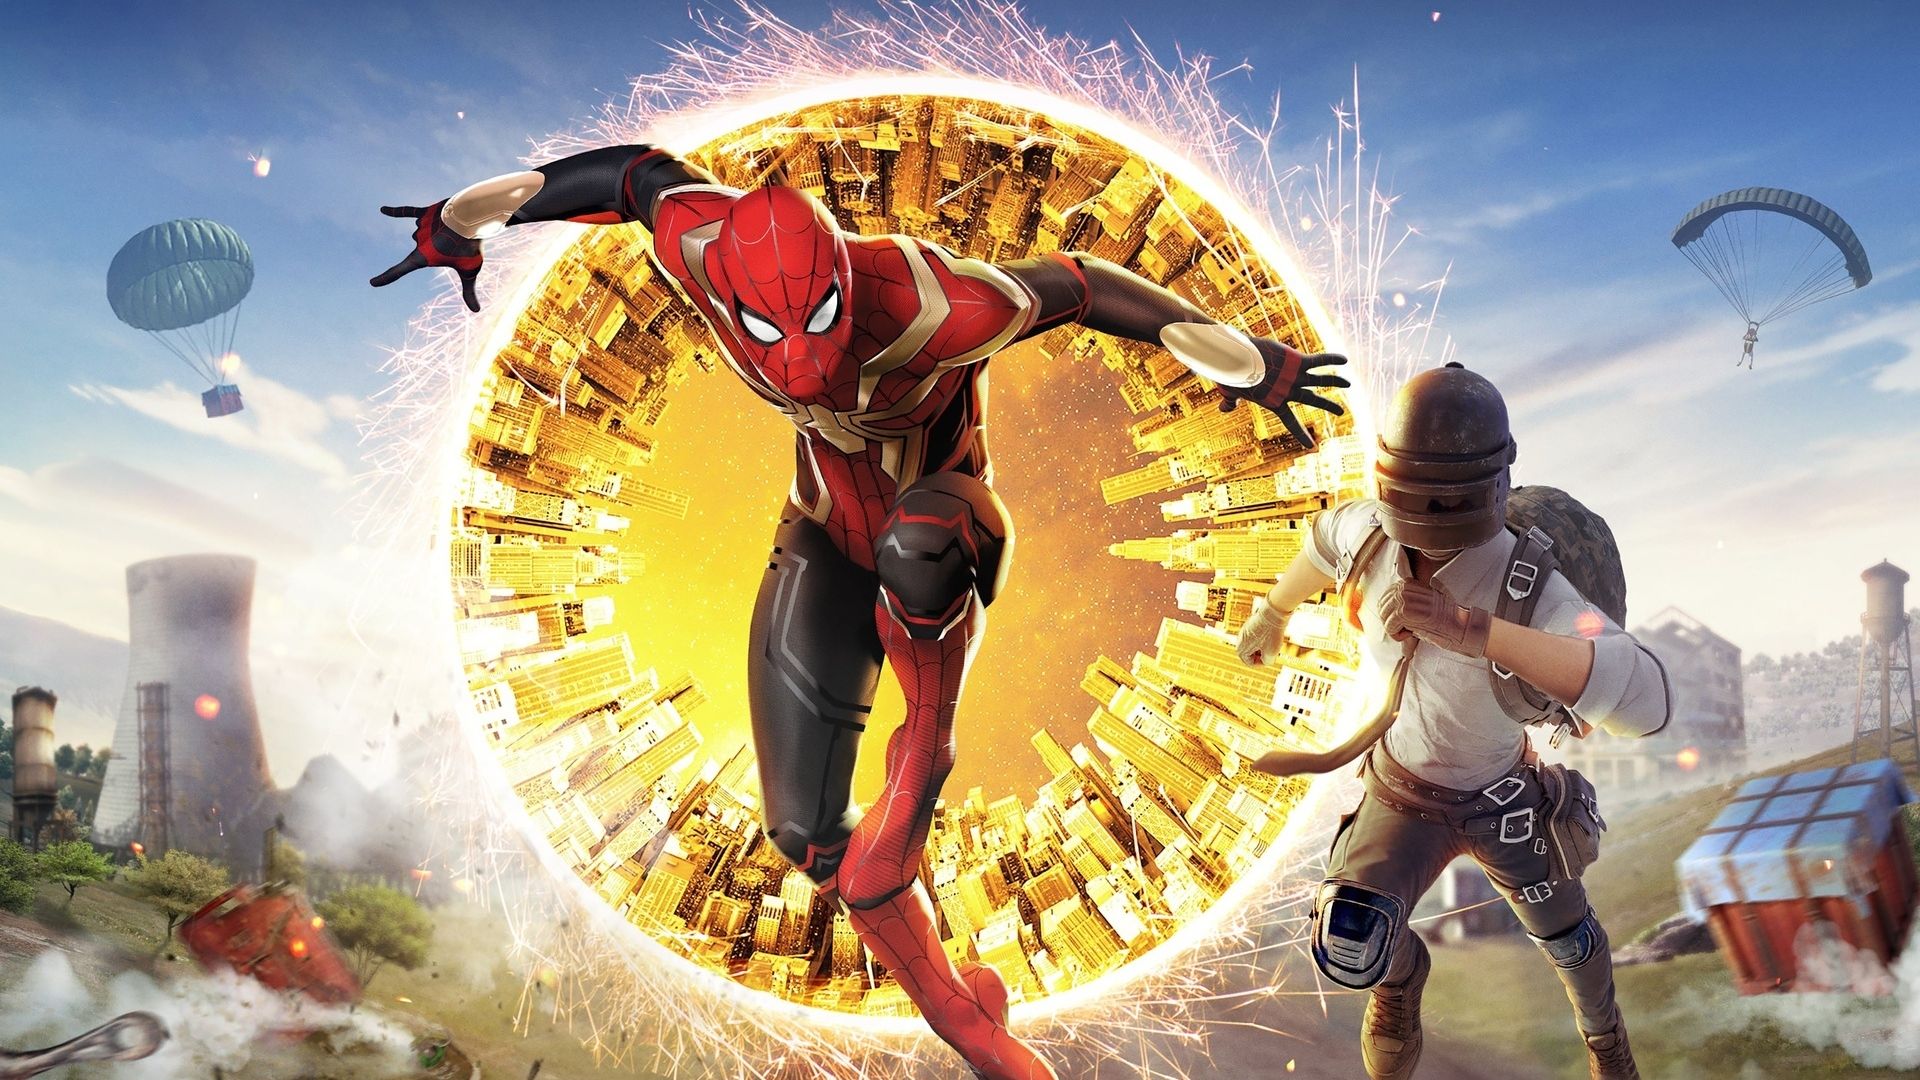 Desktop Wallpaper 22 Pubg Mobile Spider Man Cross Over Game Hd Image Picture Background